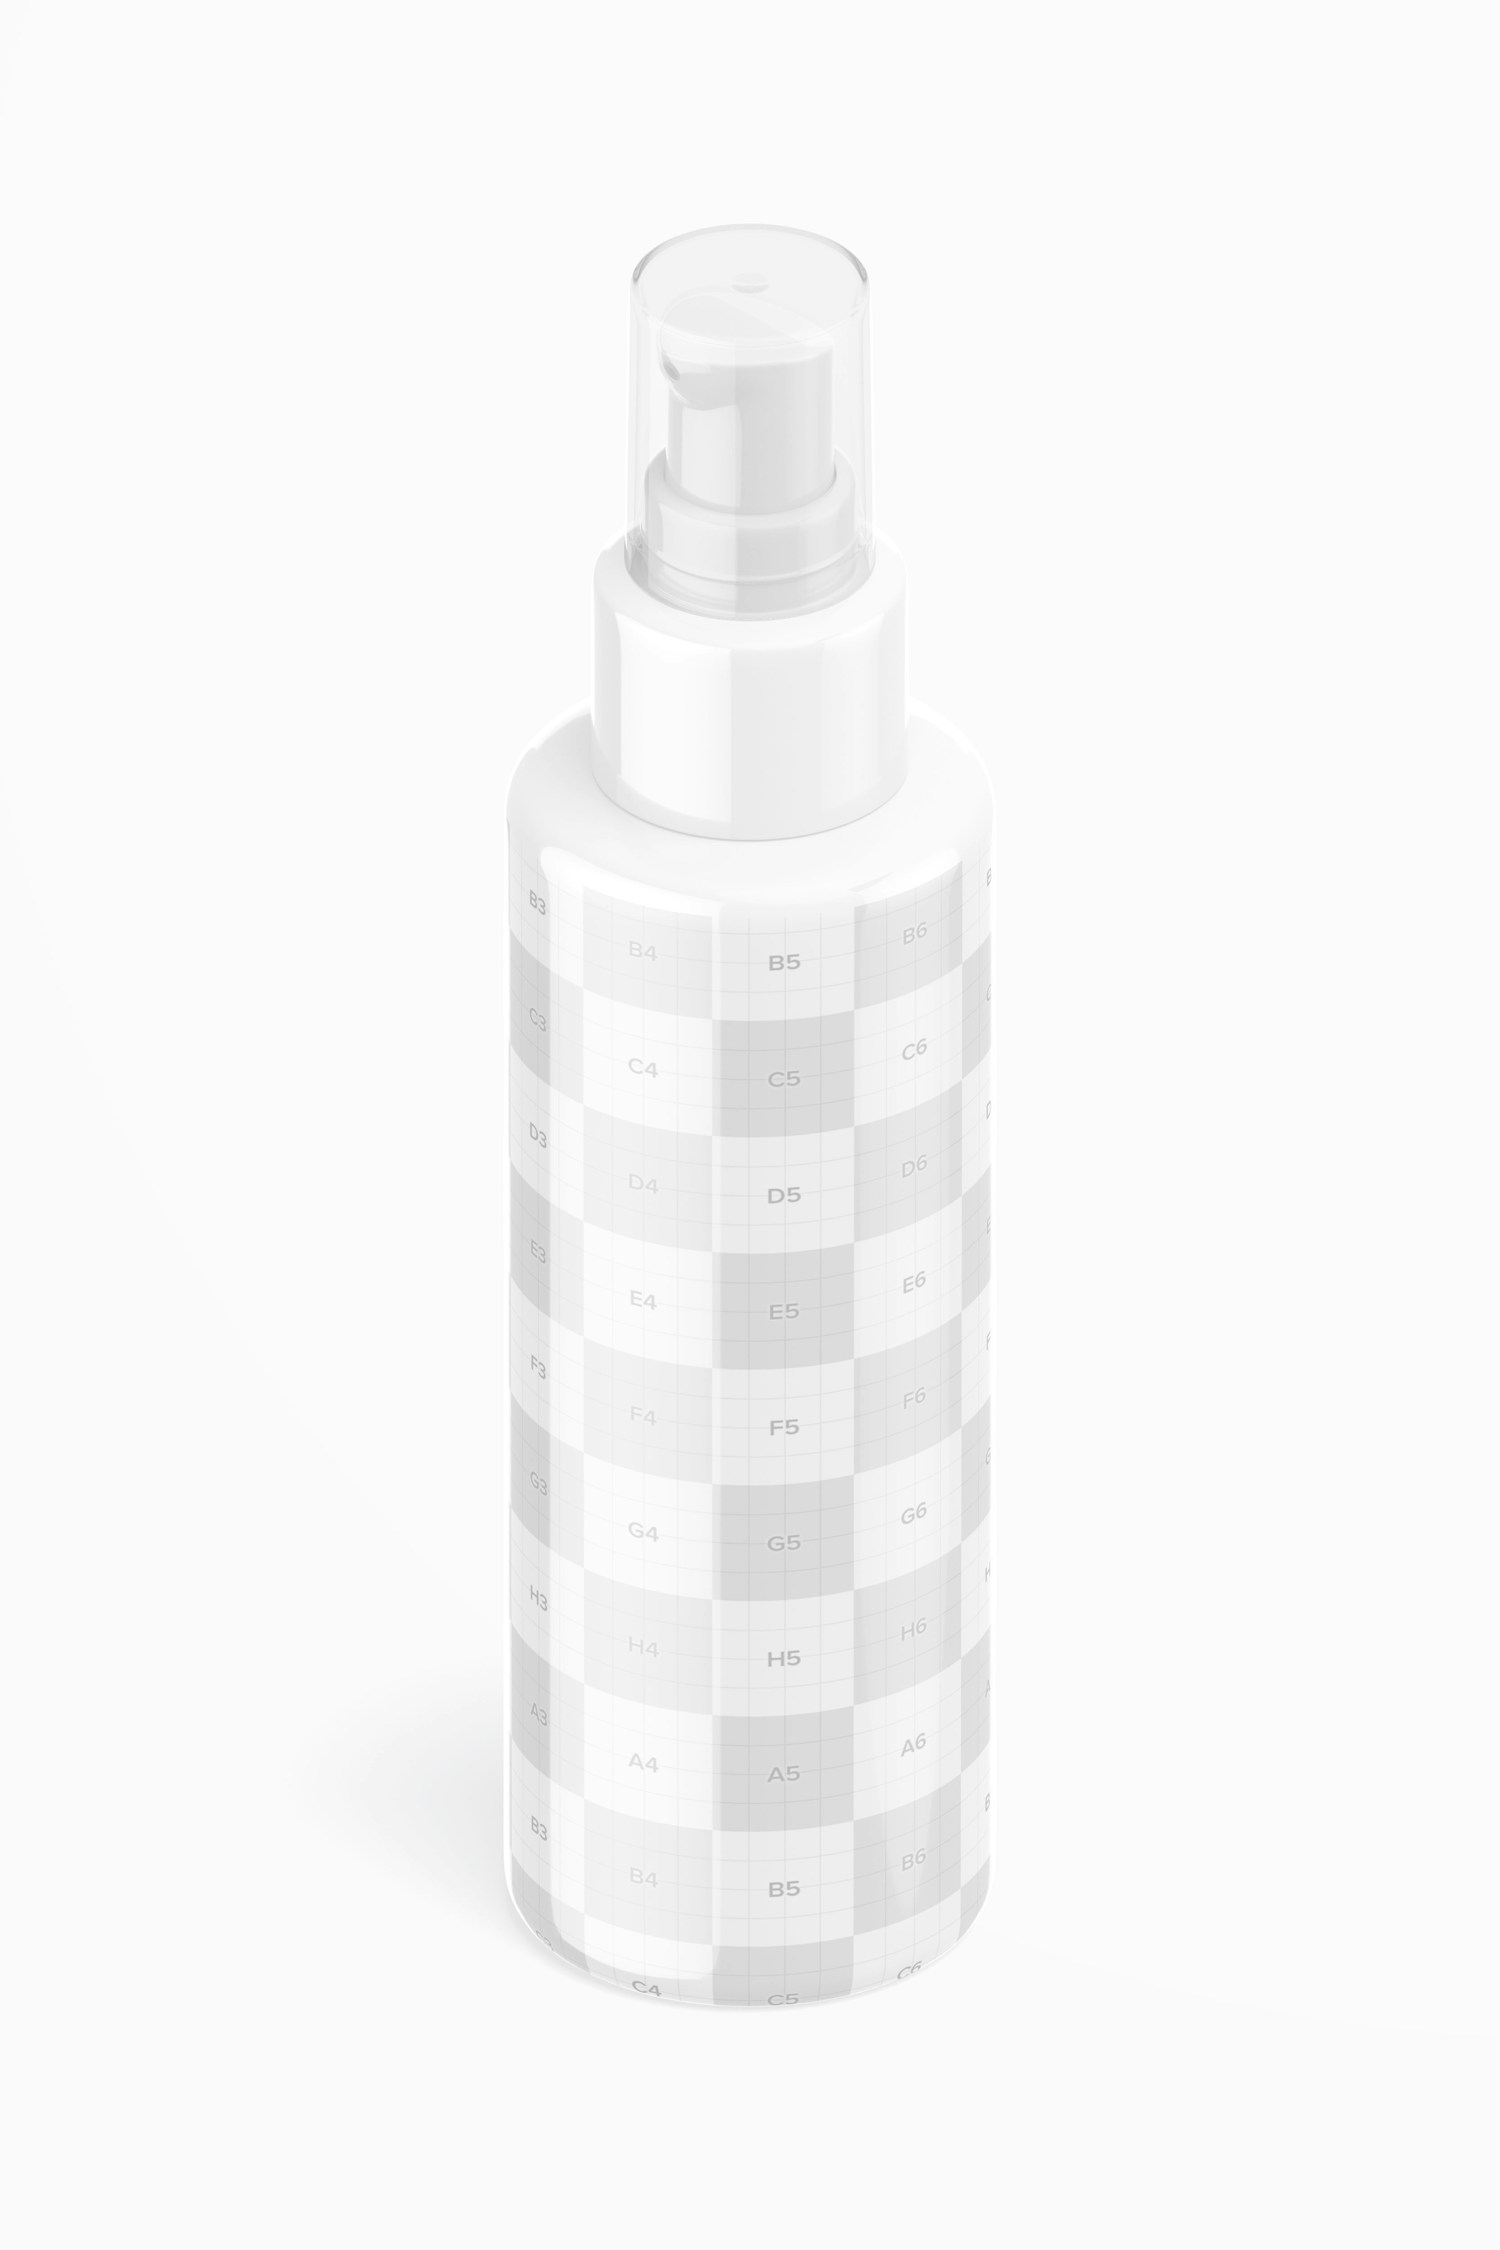 3.38 oz Pump Bottle Mockup, Isometric Right View